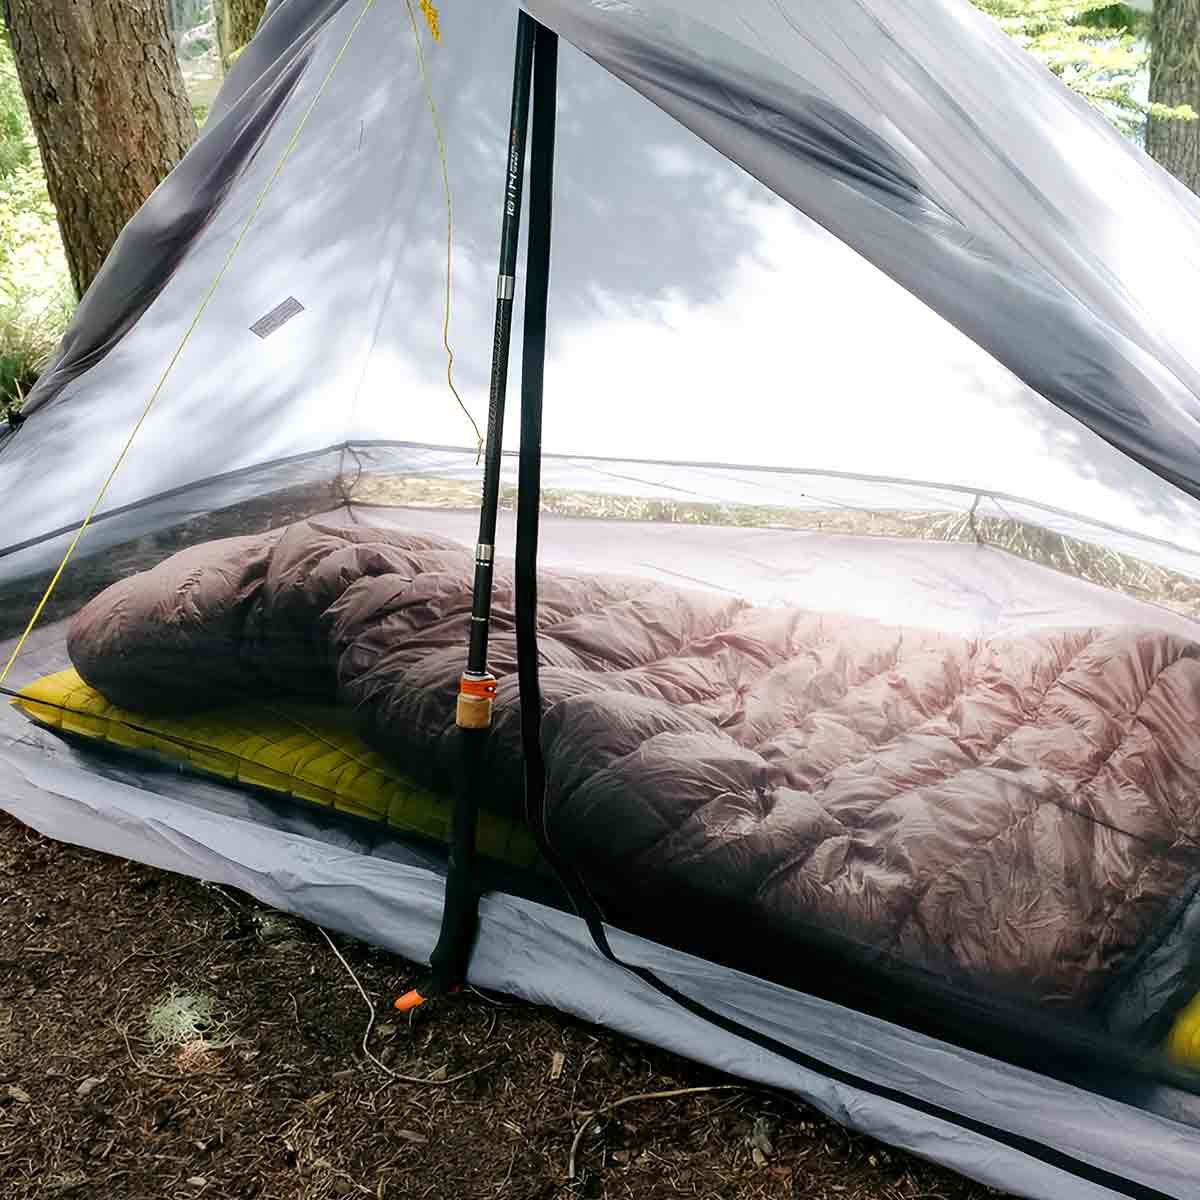 Six Moon Designs Lunar Solo backapcking tent - 1 person